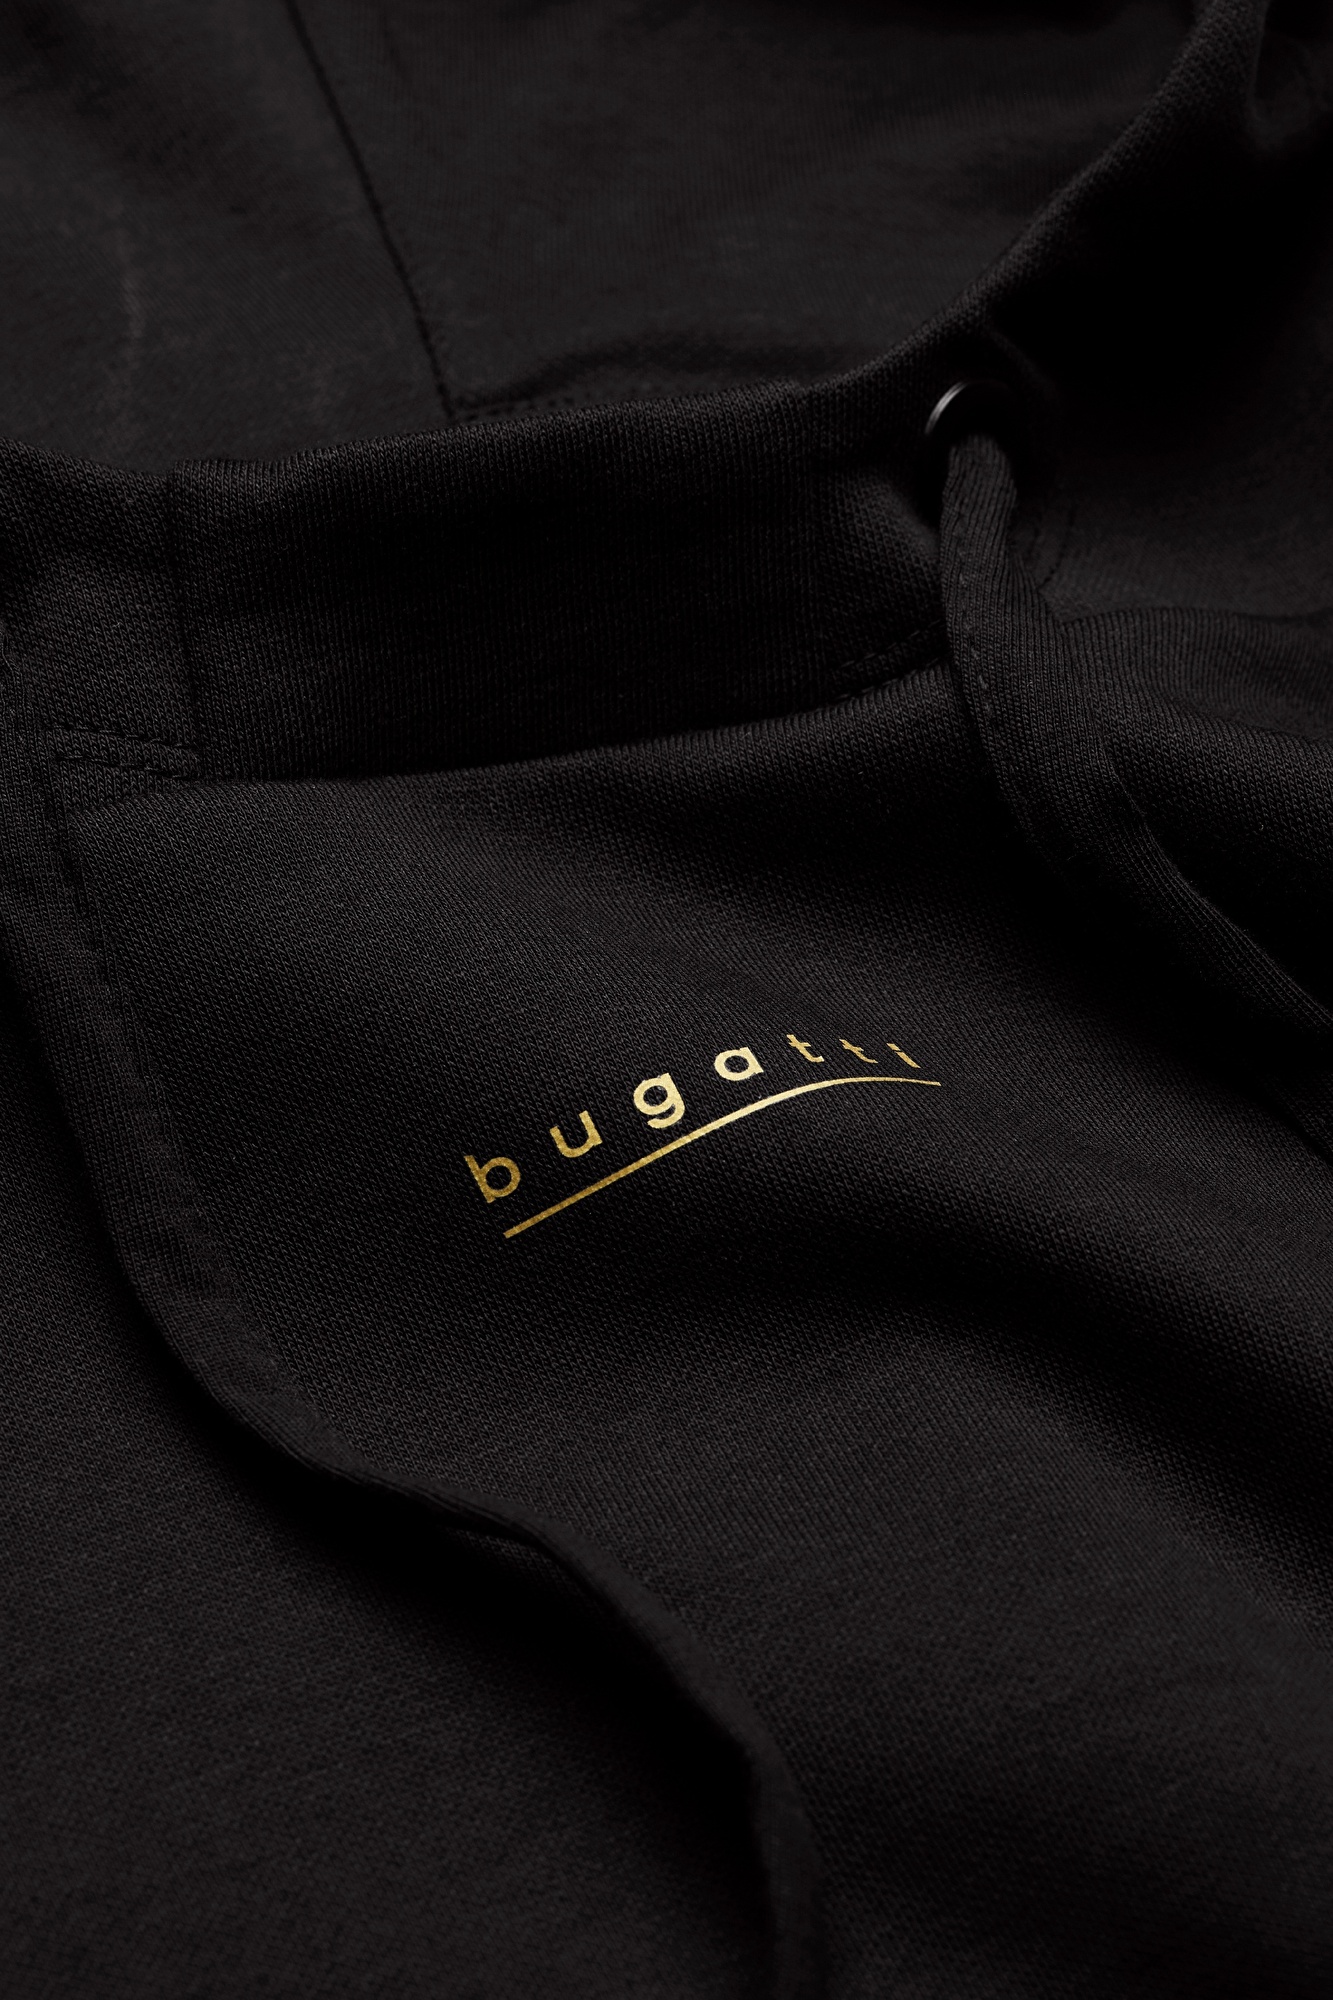 print Hooded black sweatshirt gold small in | With bugatti in logo